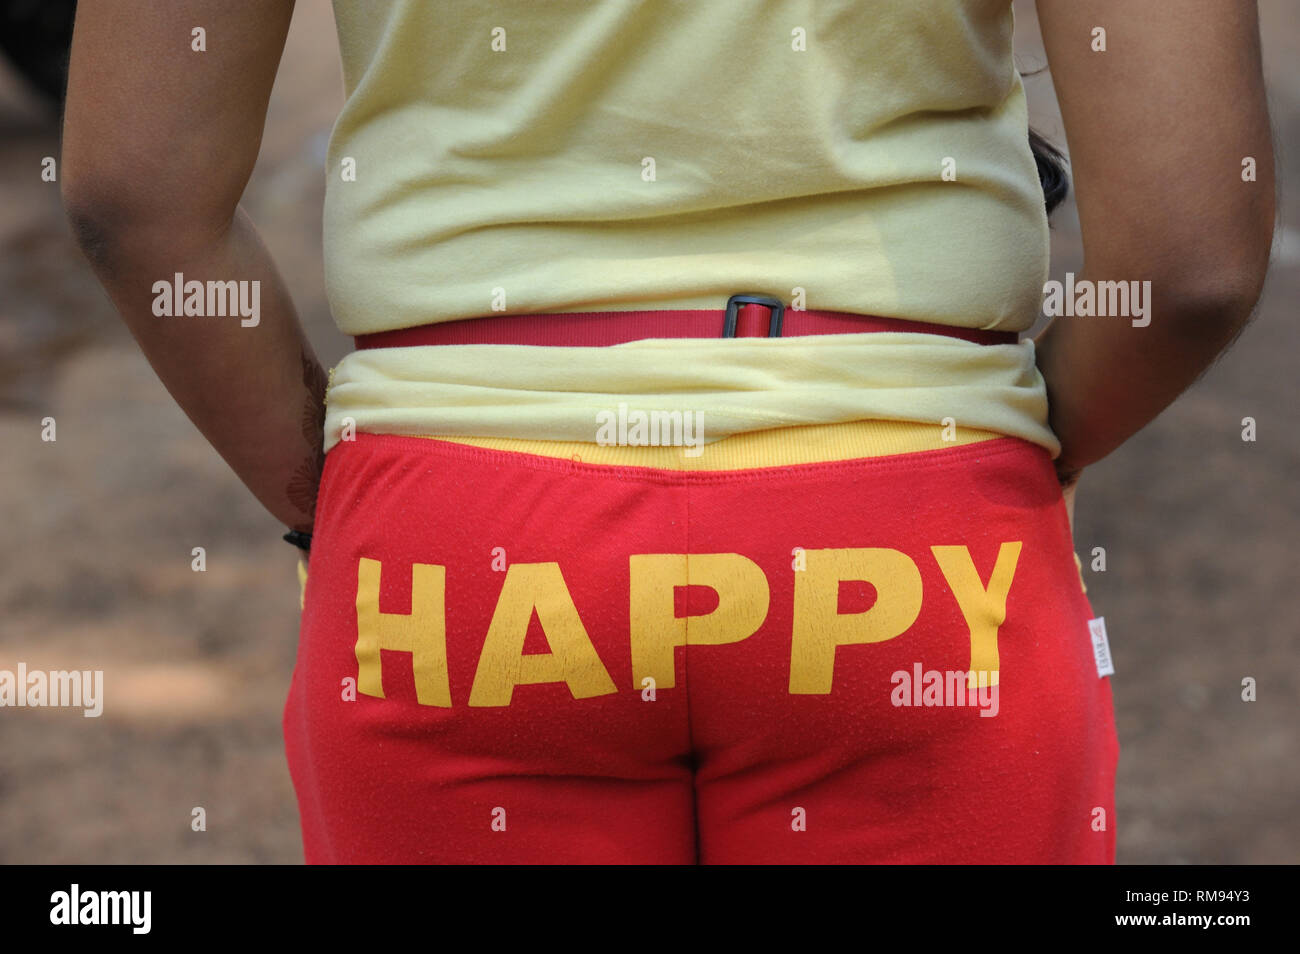 Happy printed on pants back Stock Photo